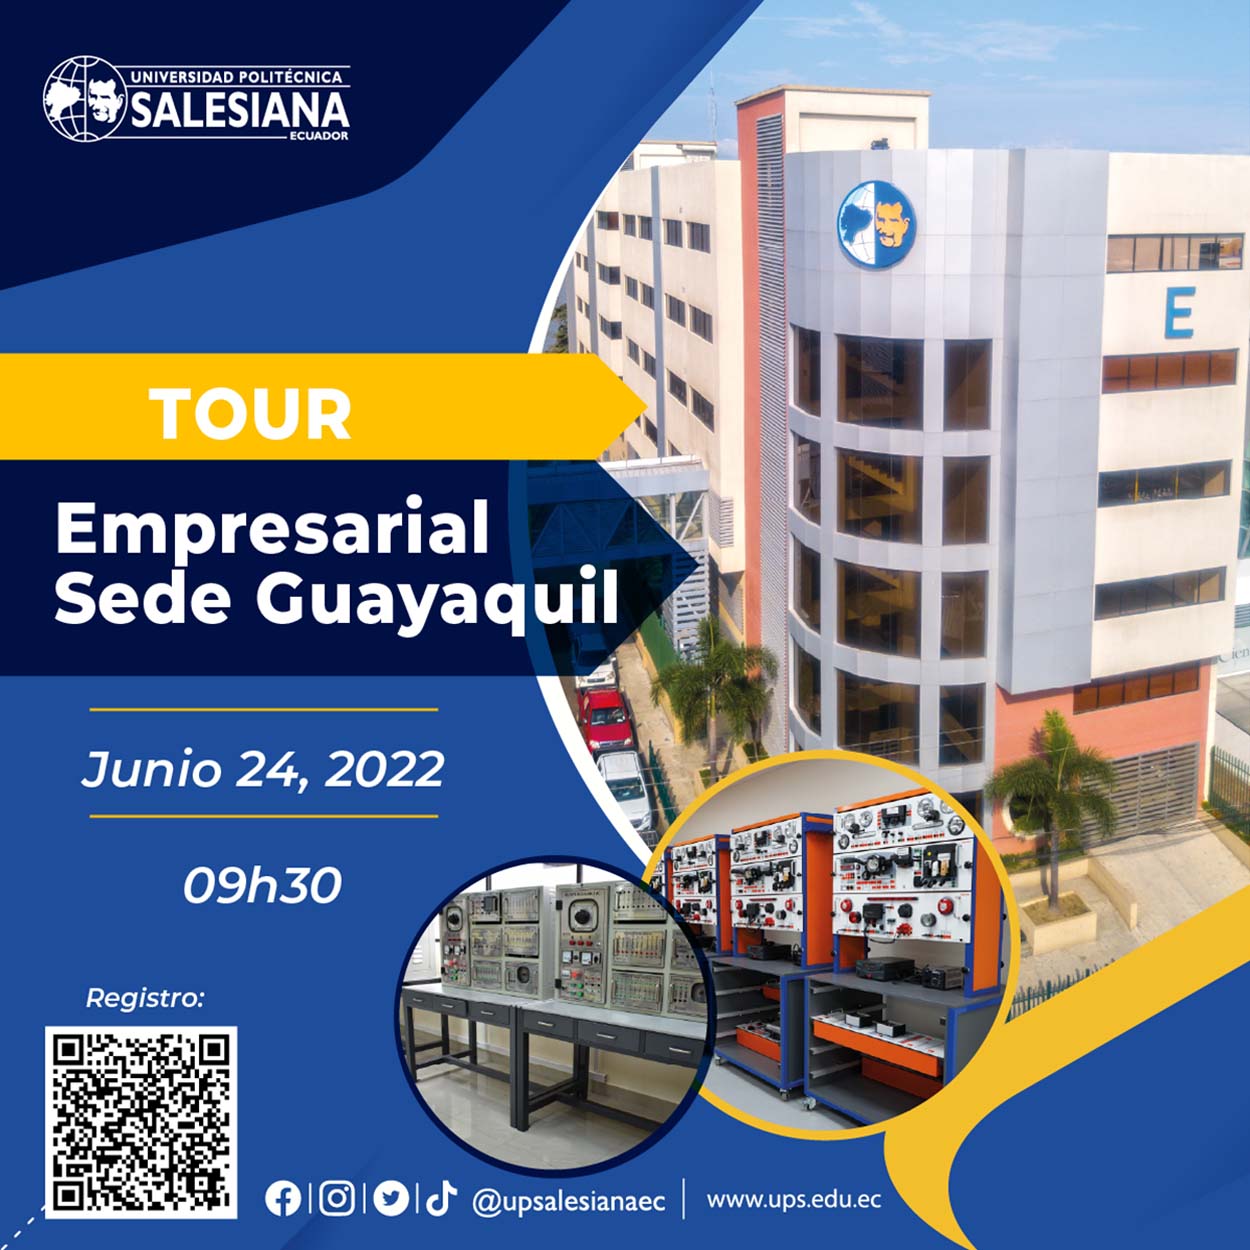 Afiche promocional del Tour Empresarial sede Guayaquil 2022